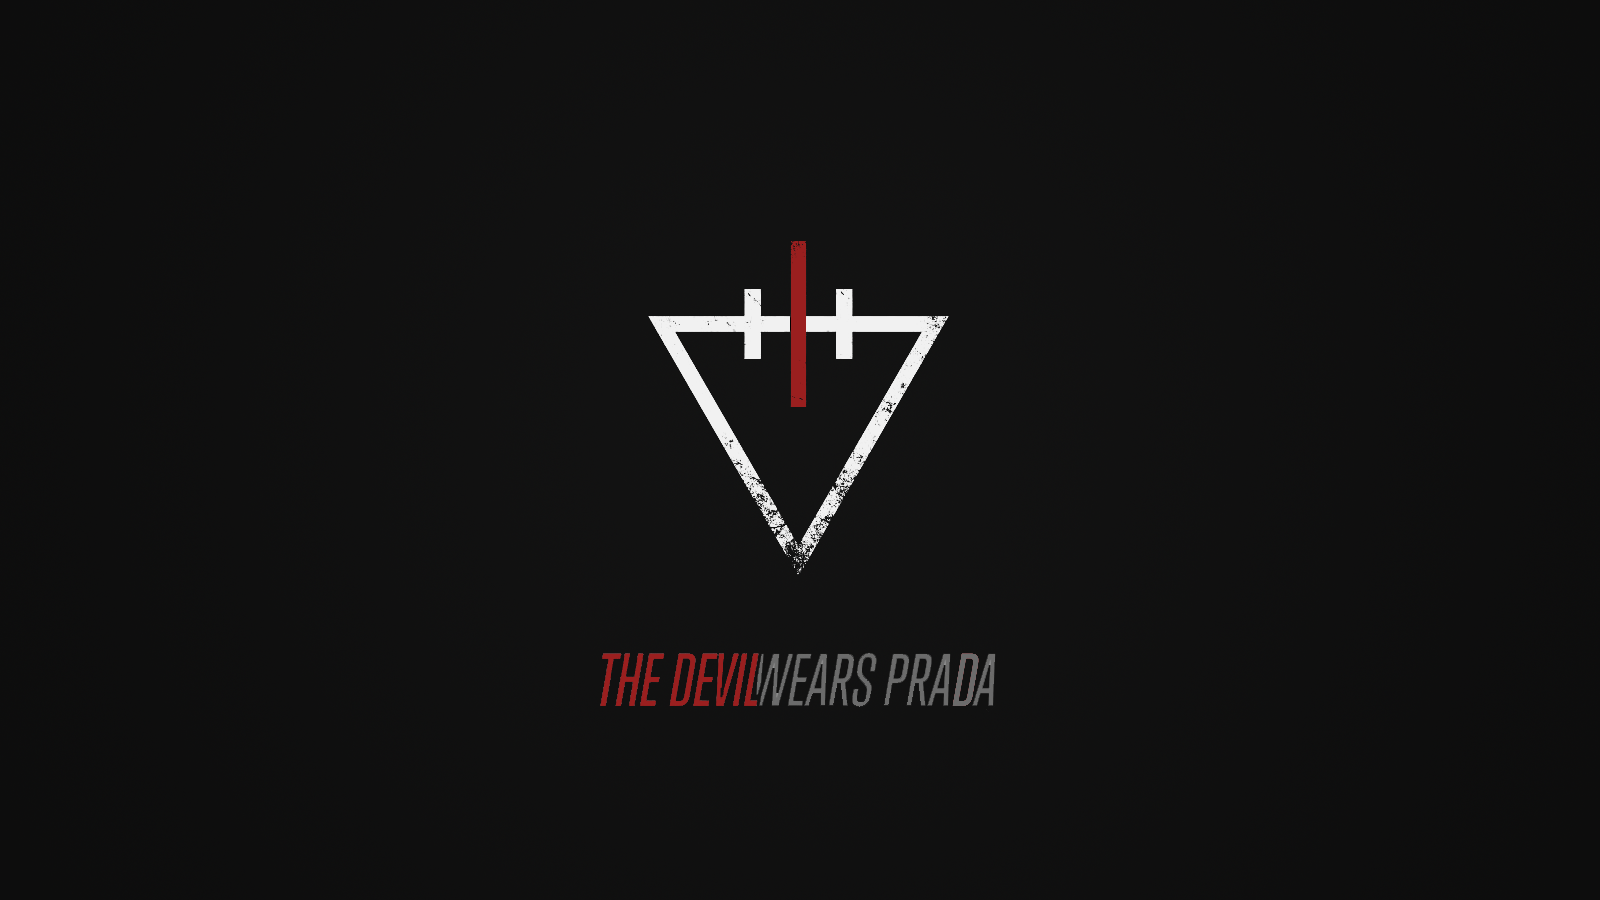 prada logo wallpaper. dEsignstUff. Devil wears prada